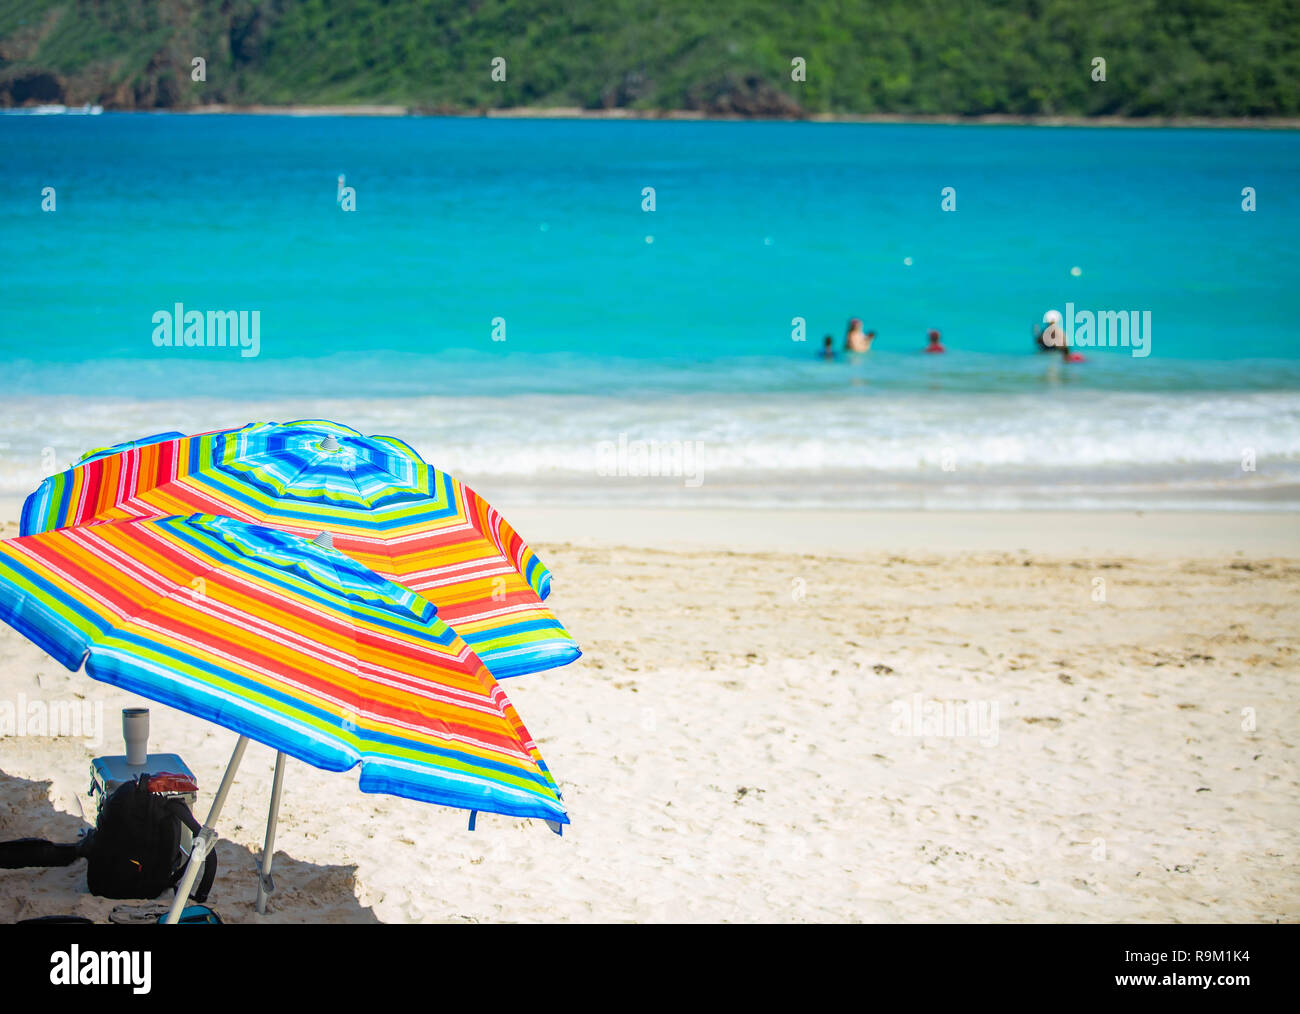 Flamenco Beach seaside shore Culebra Puerto Rico trip Stock Photo